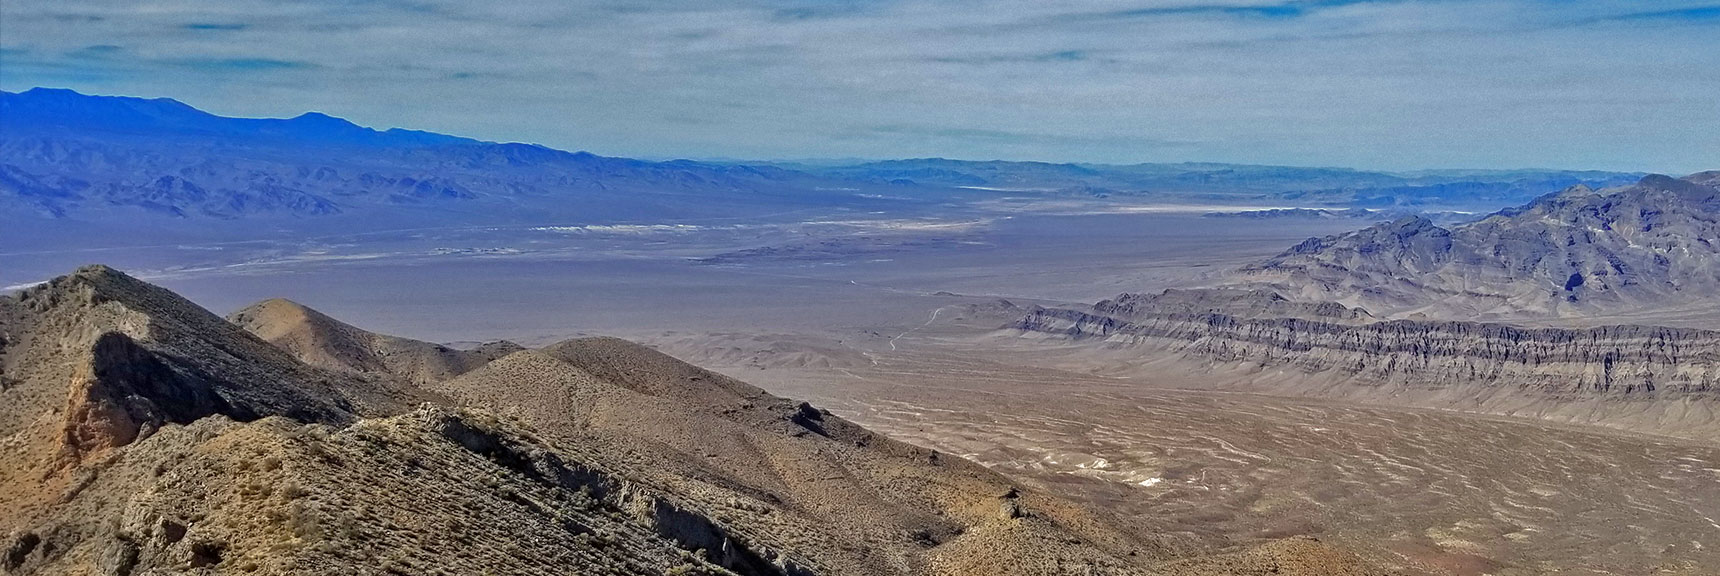 Gass Peak Grand Crossing | Gass Peak | Desert National Wildlife Refuge, Nevada